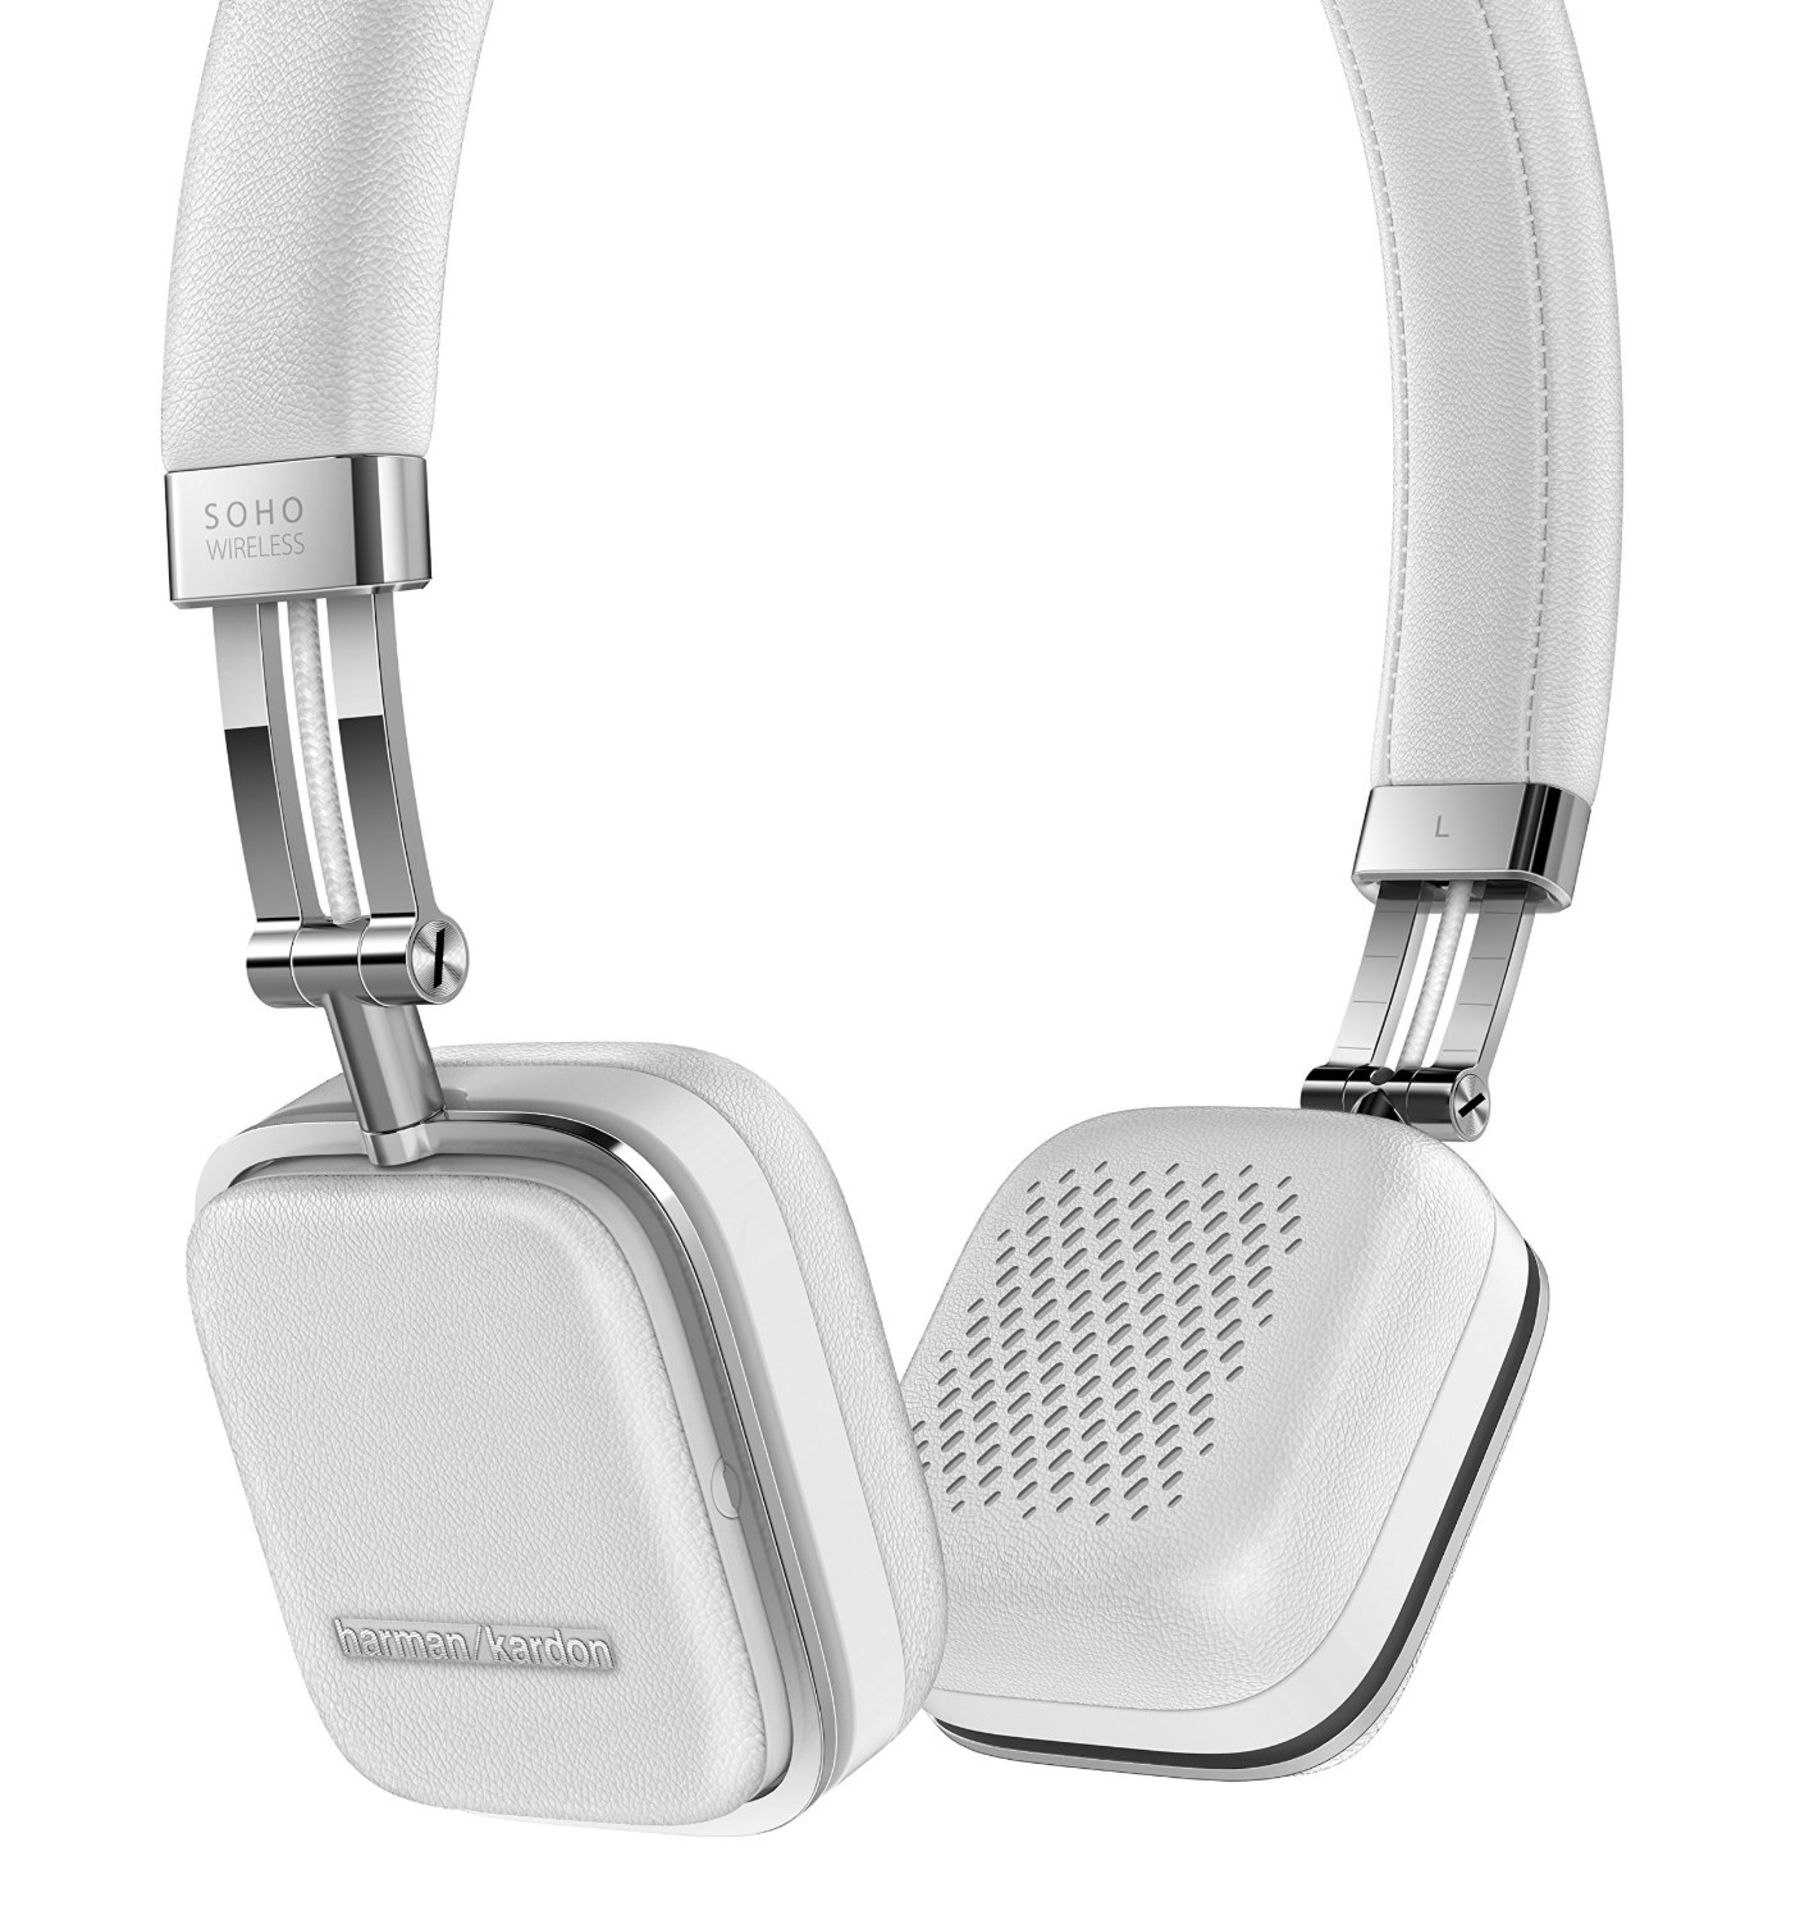 V Brand New Harman Kardon Soho On Ear Wireless Headphones In White RRP:£249.99 Amazon Price £229.99 - Bild 2 aus 2